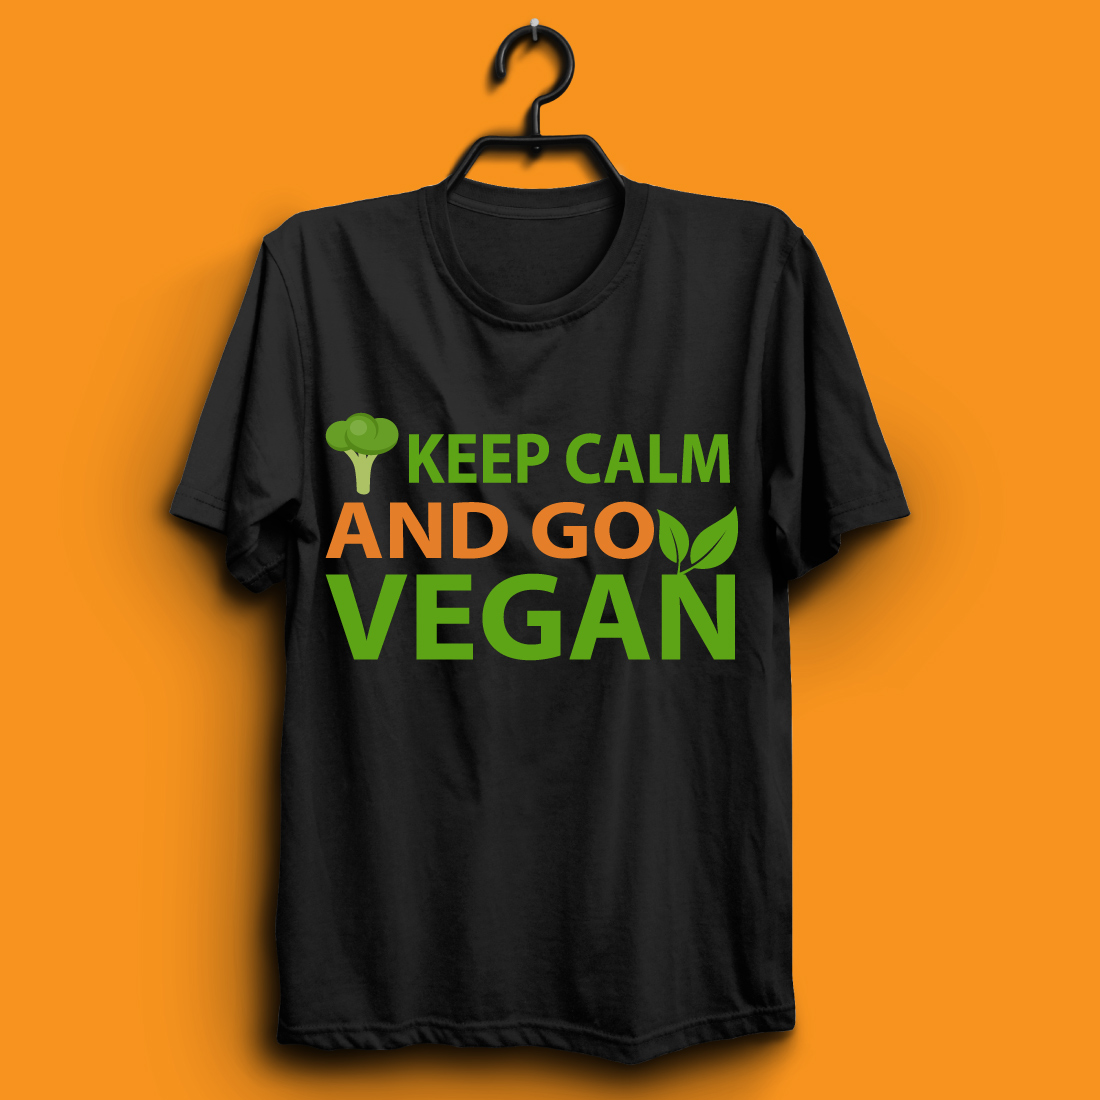 world vegan day t shirt design02 307